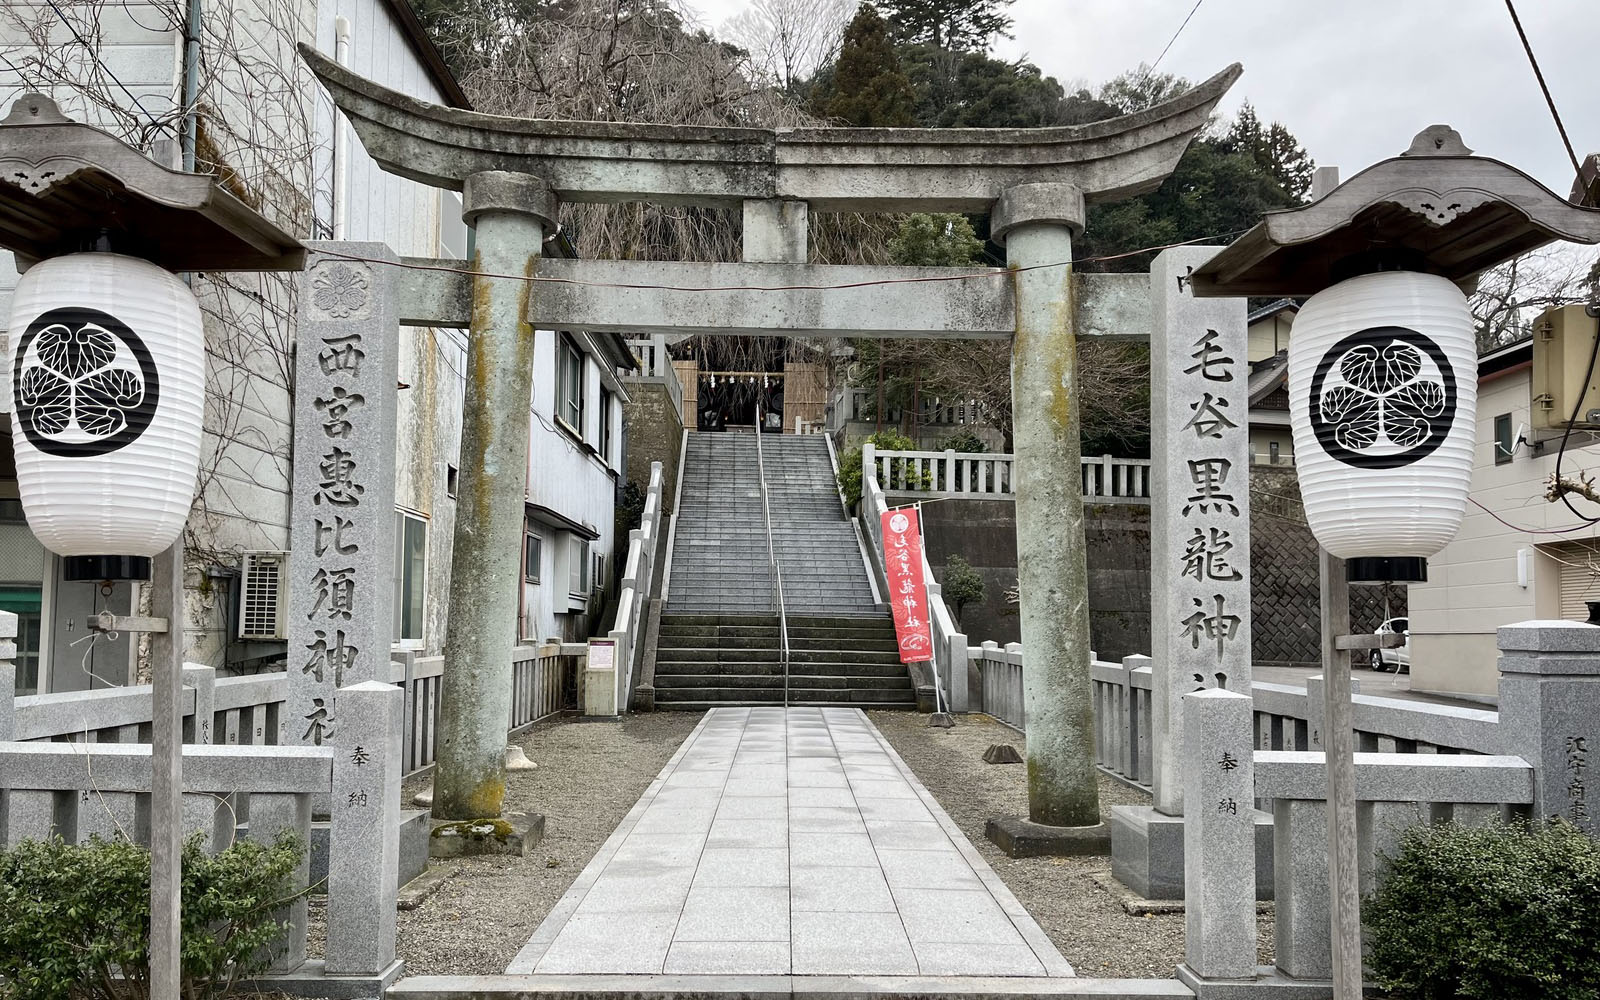 keya-kurotatsu-shrine-entrance.jpg